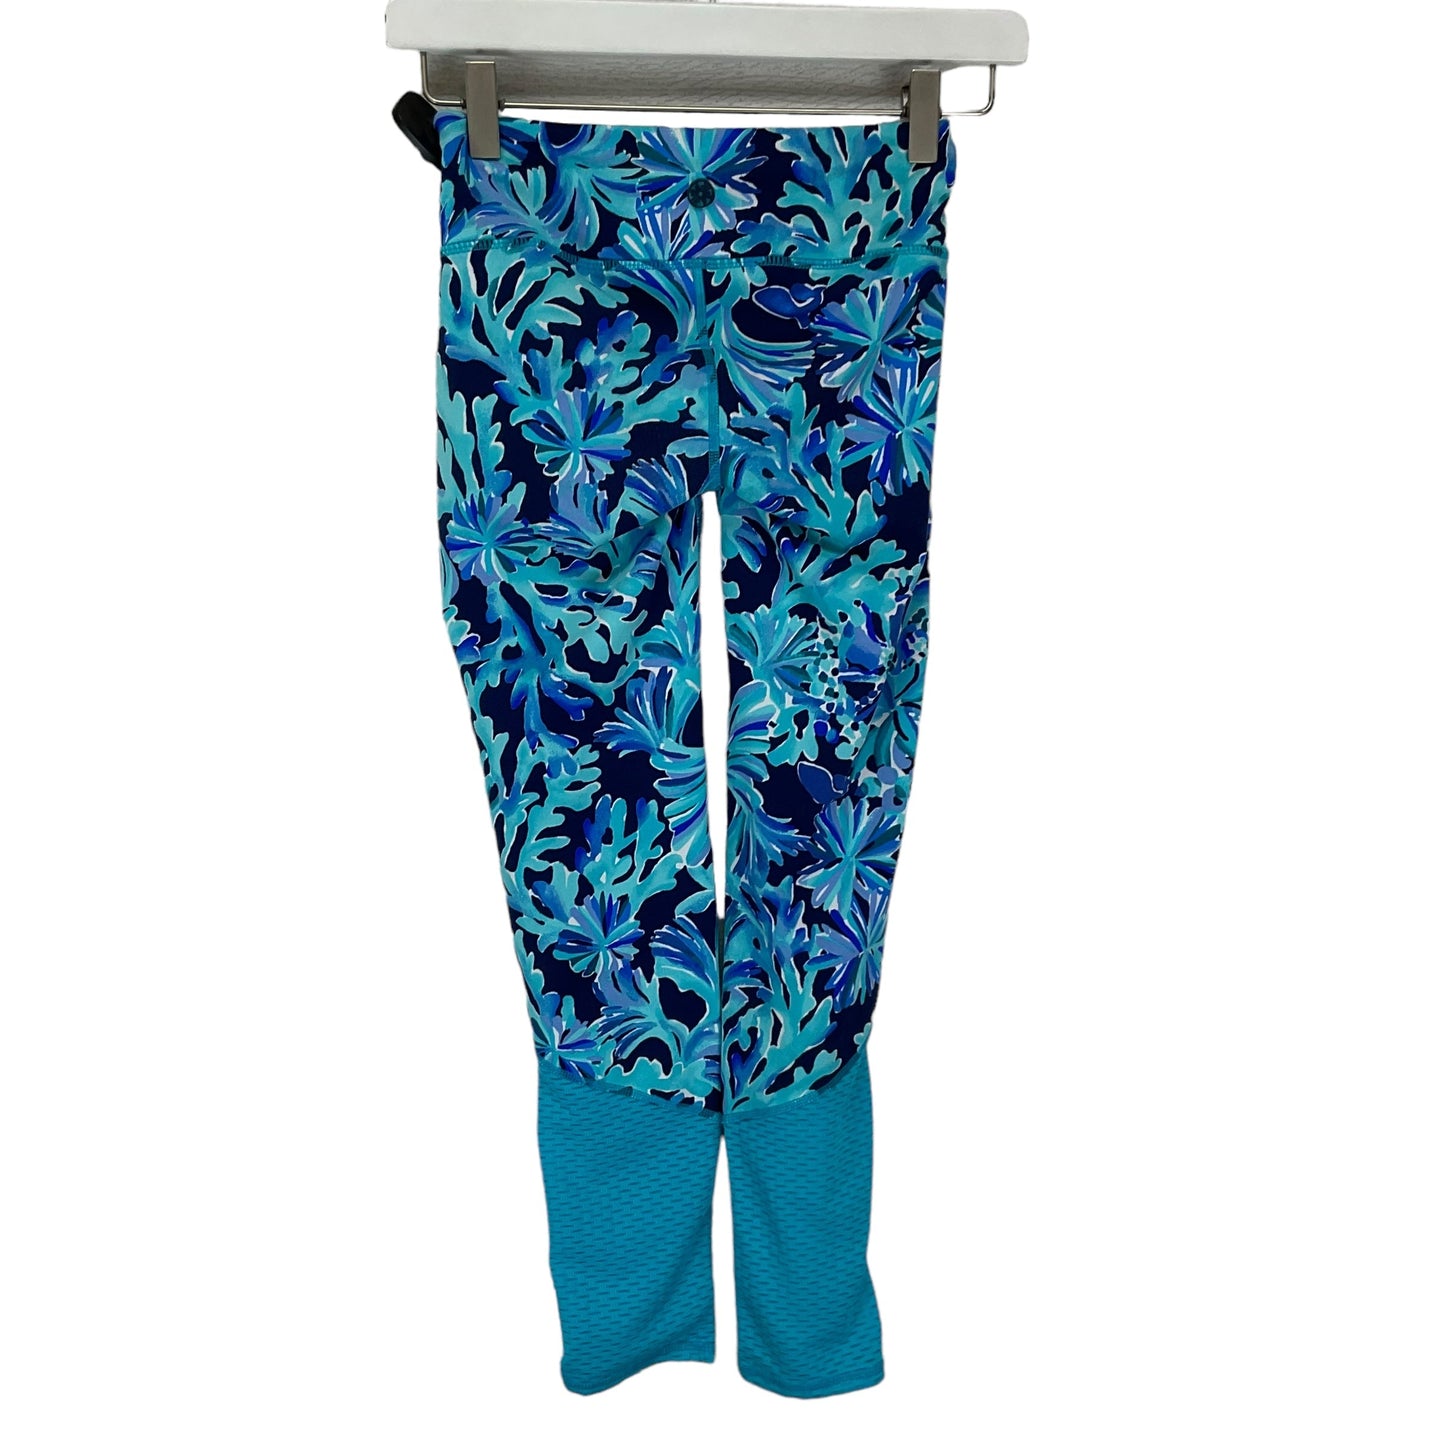 Blue Pants Designer Lilly Pulitzer, Size Xs